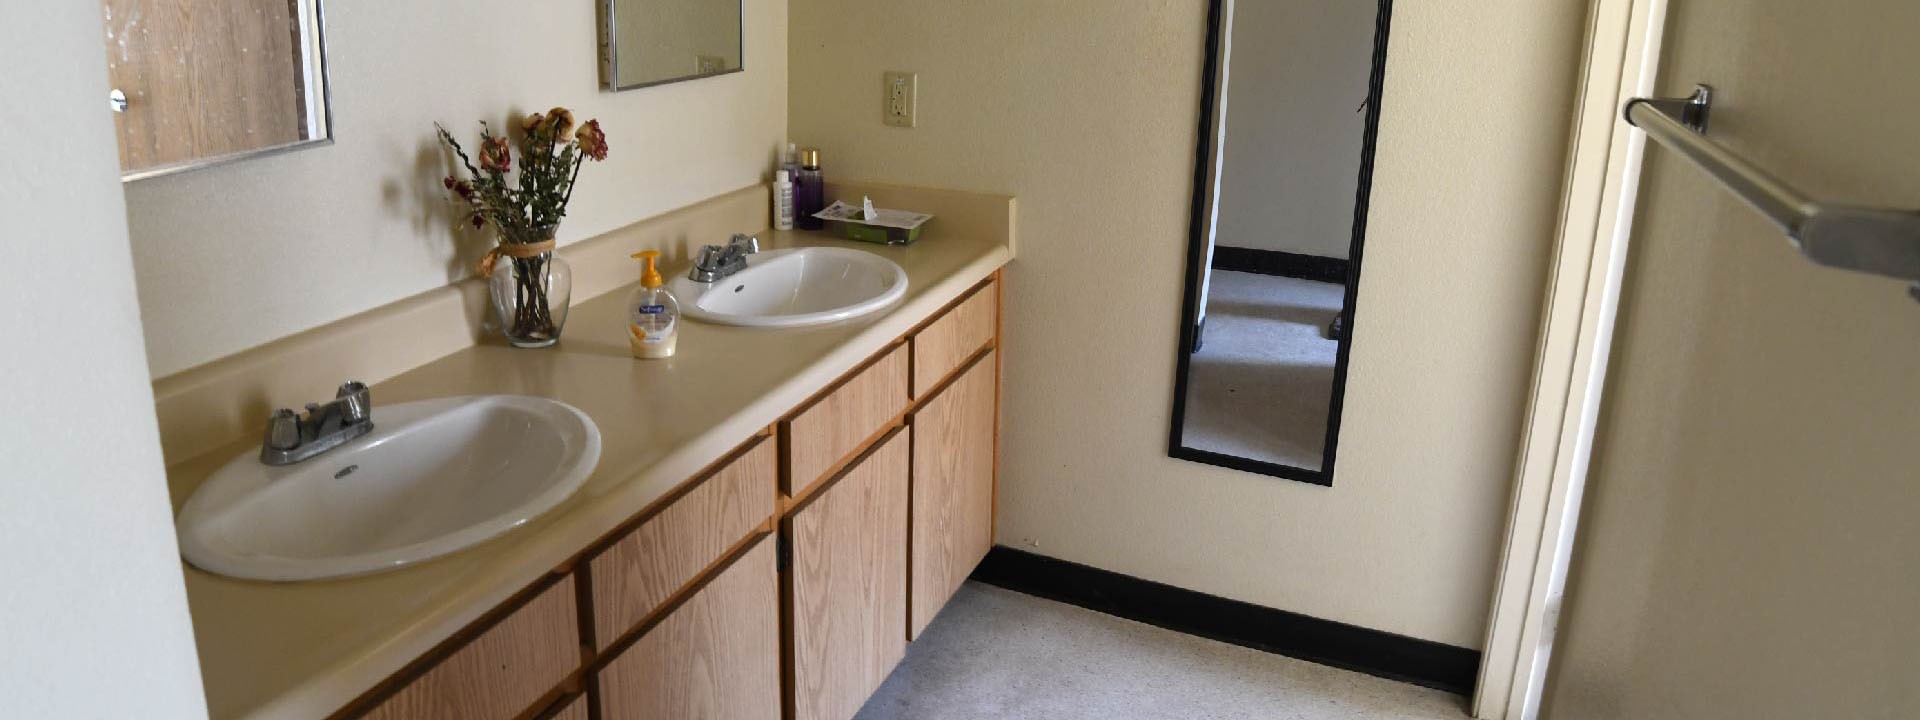 A bathroom with double sinks.